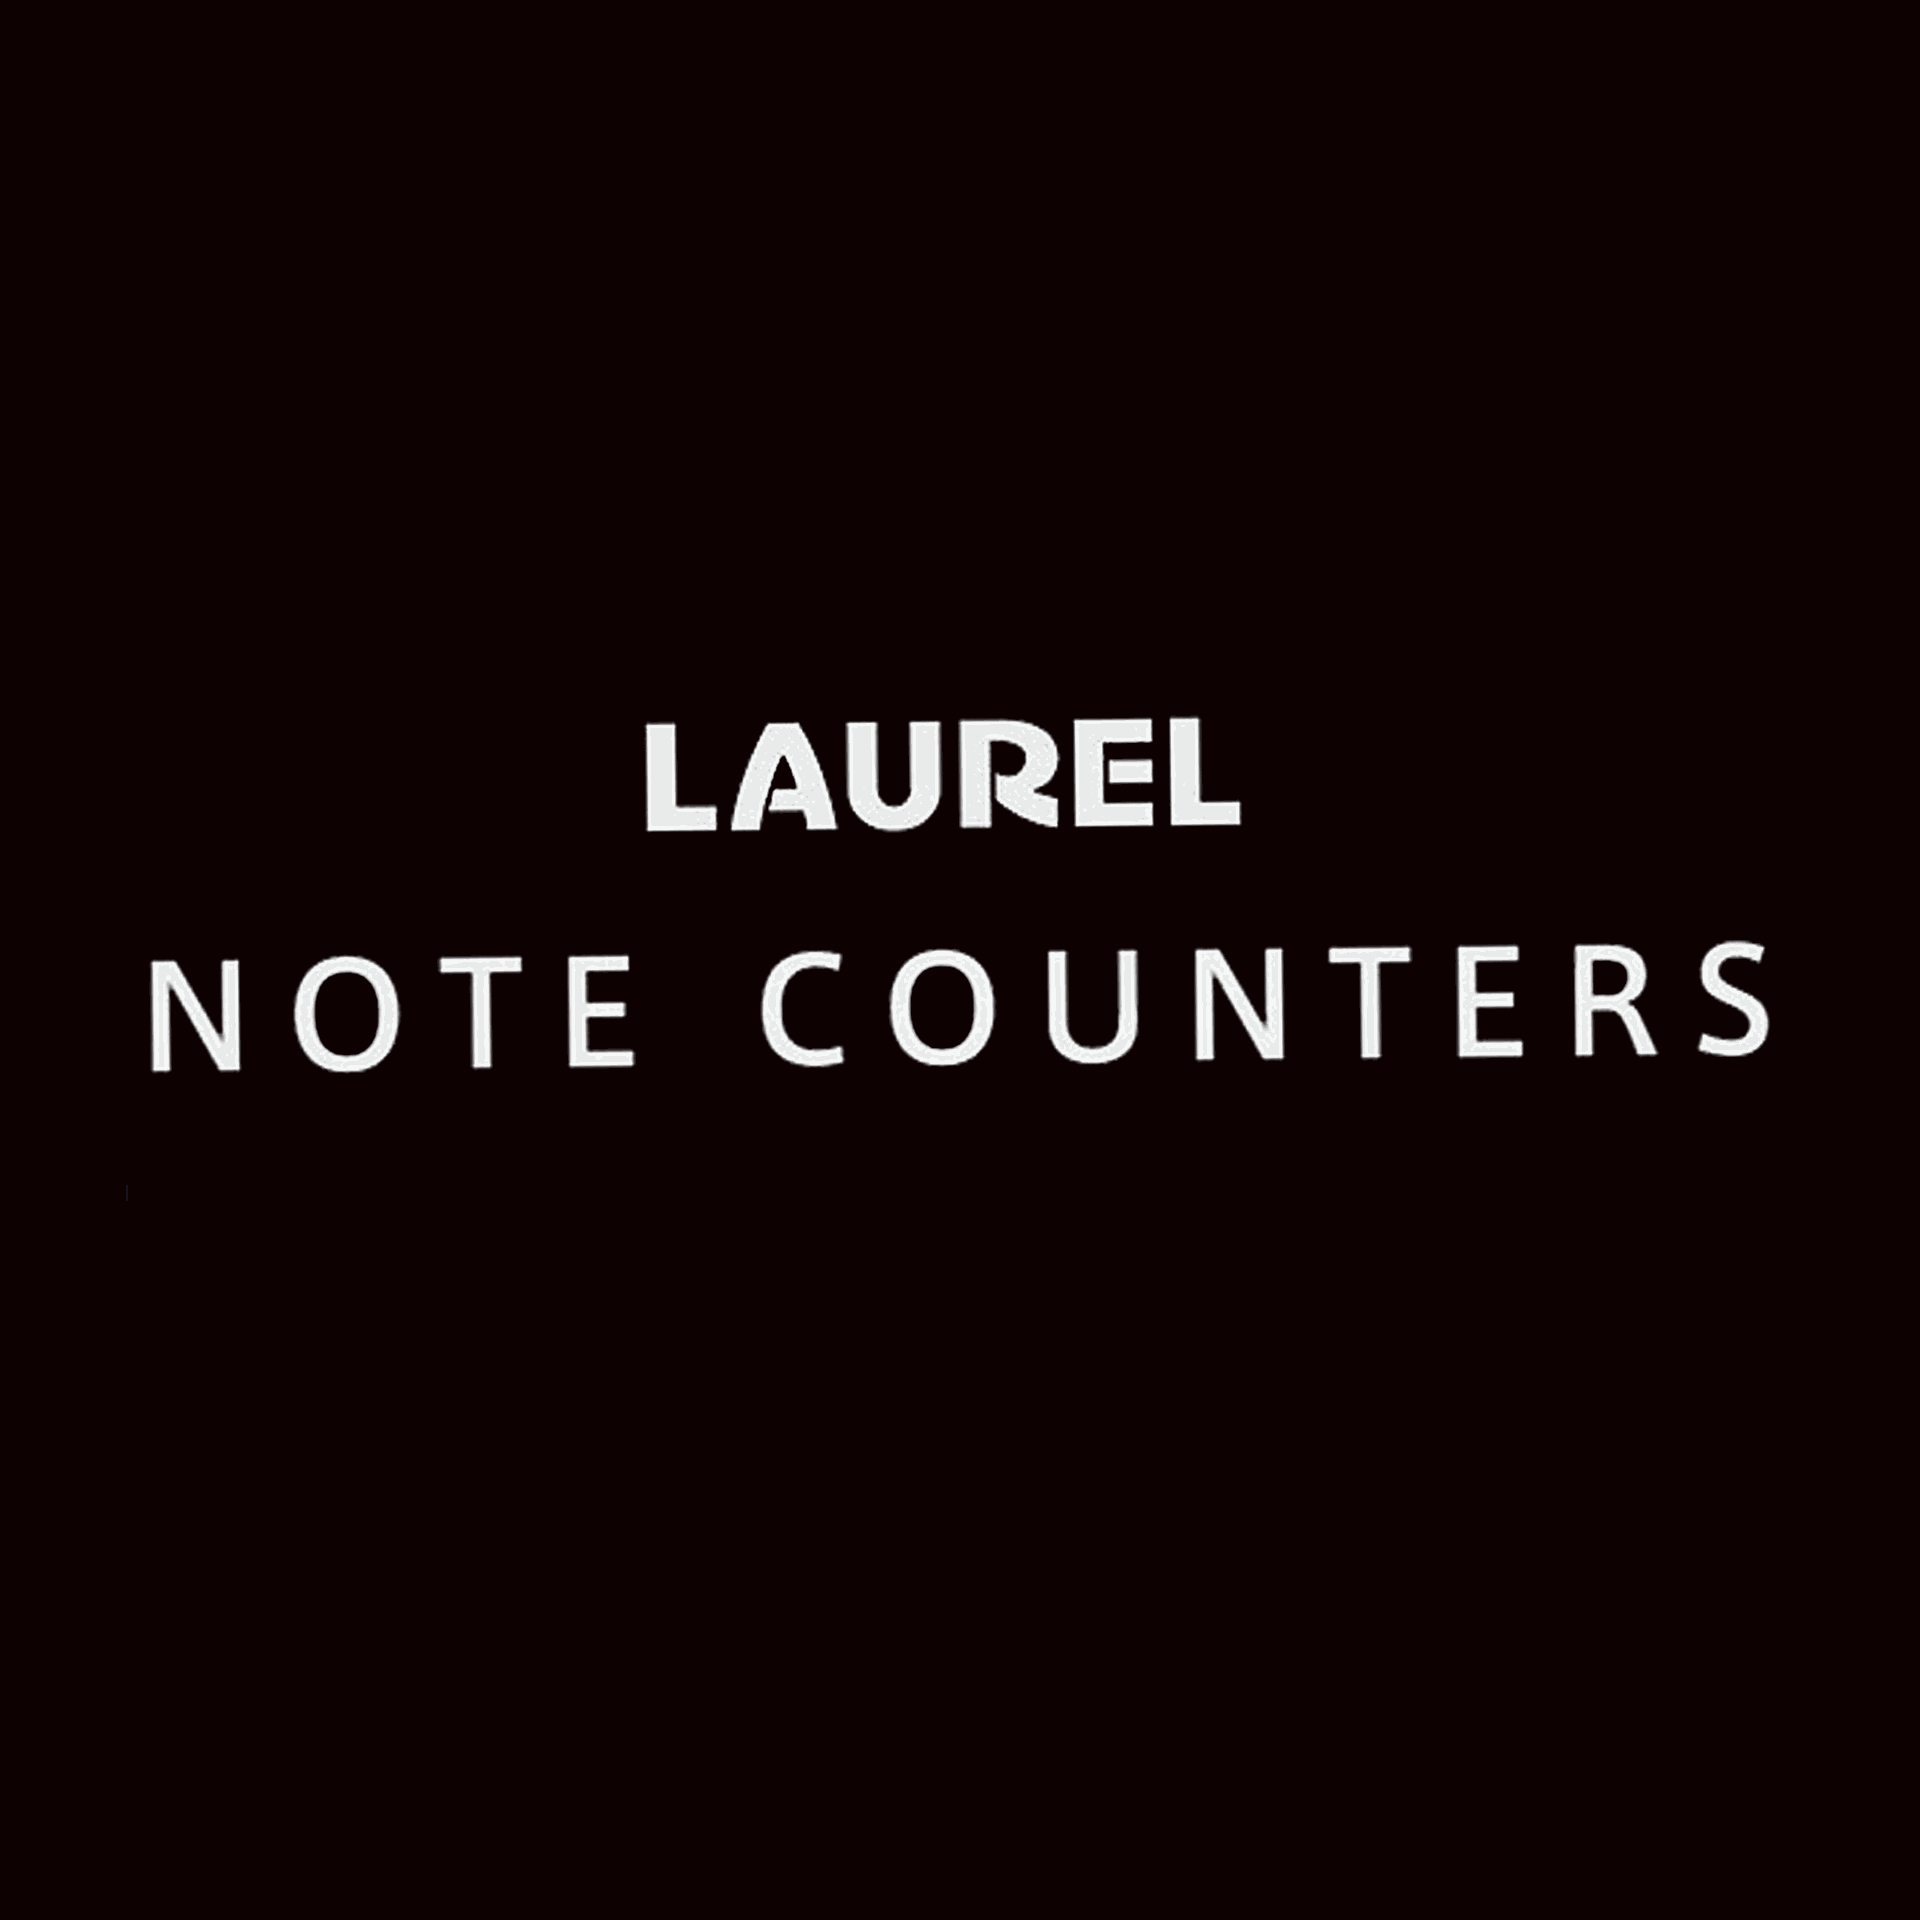 Product Brand: Laurel